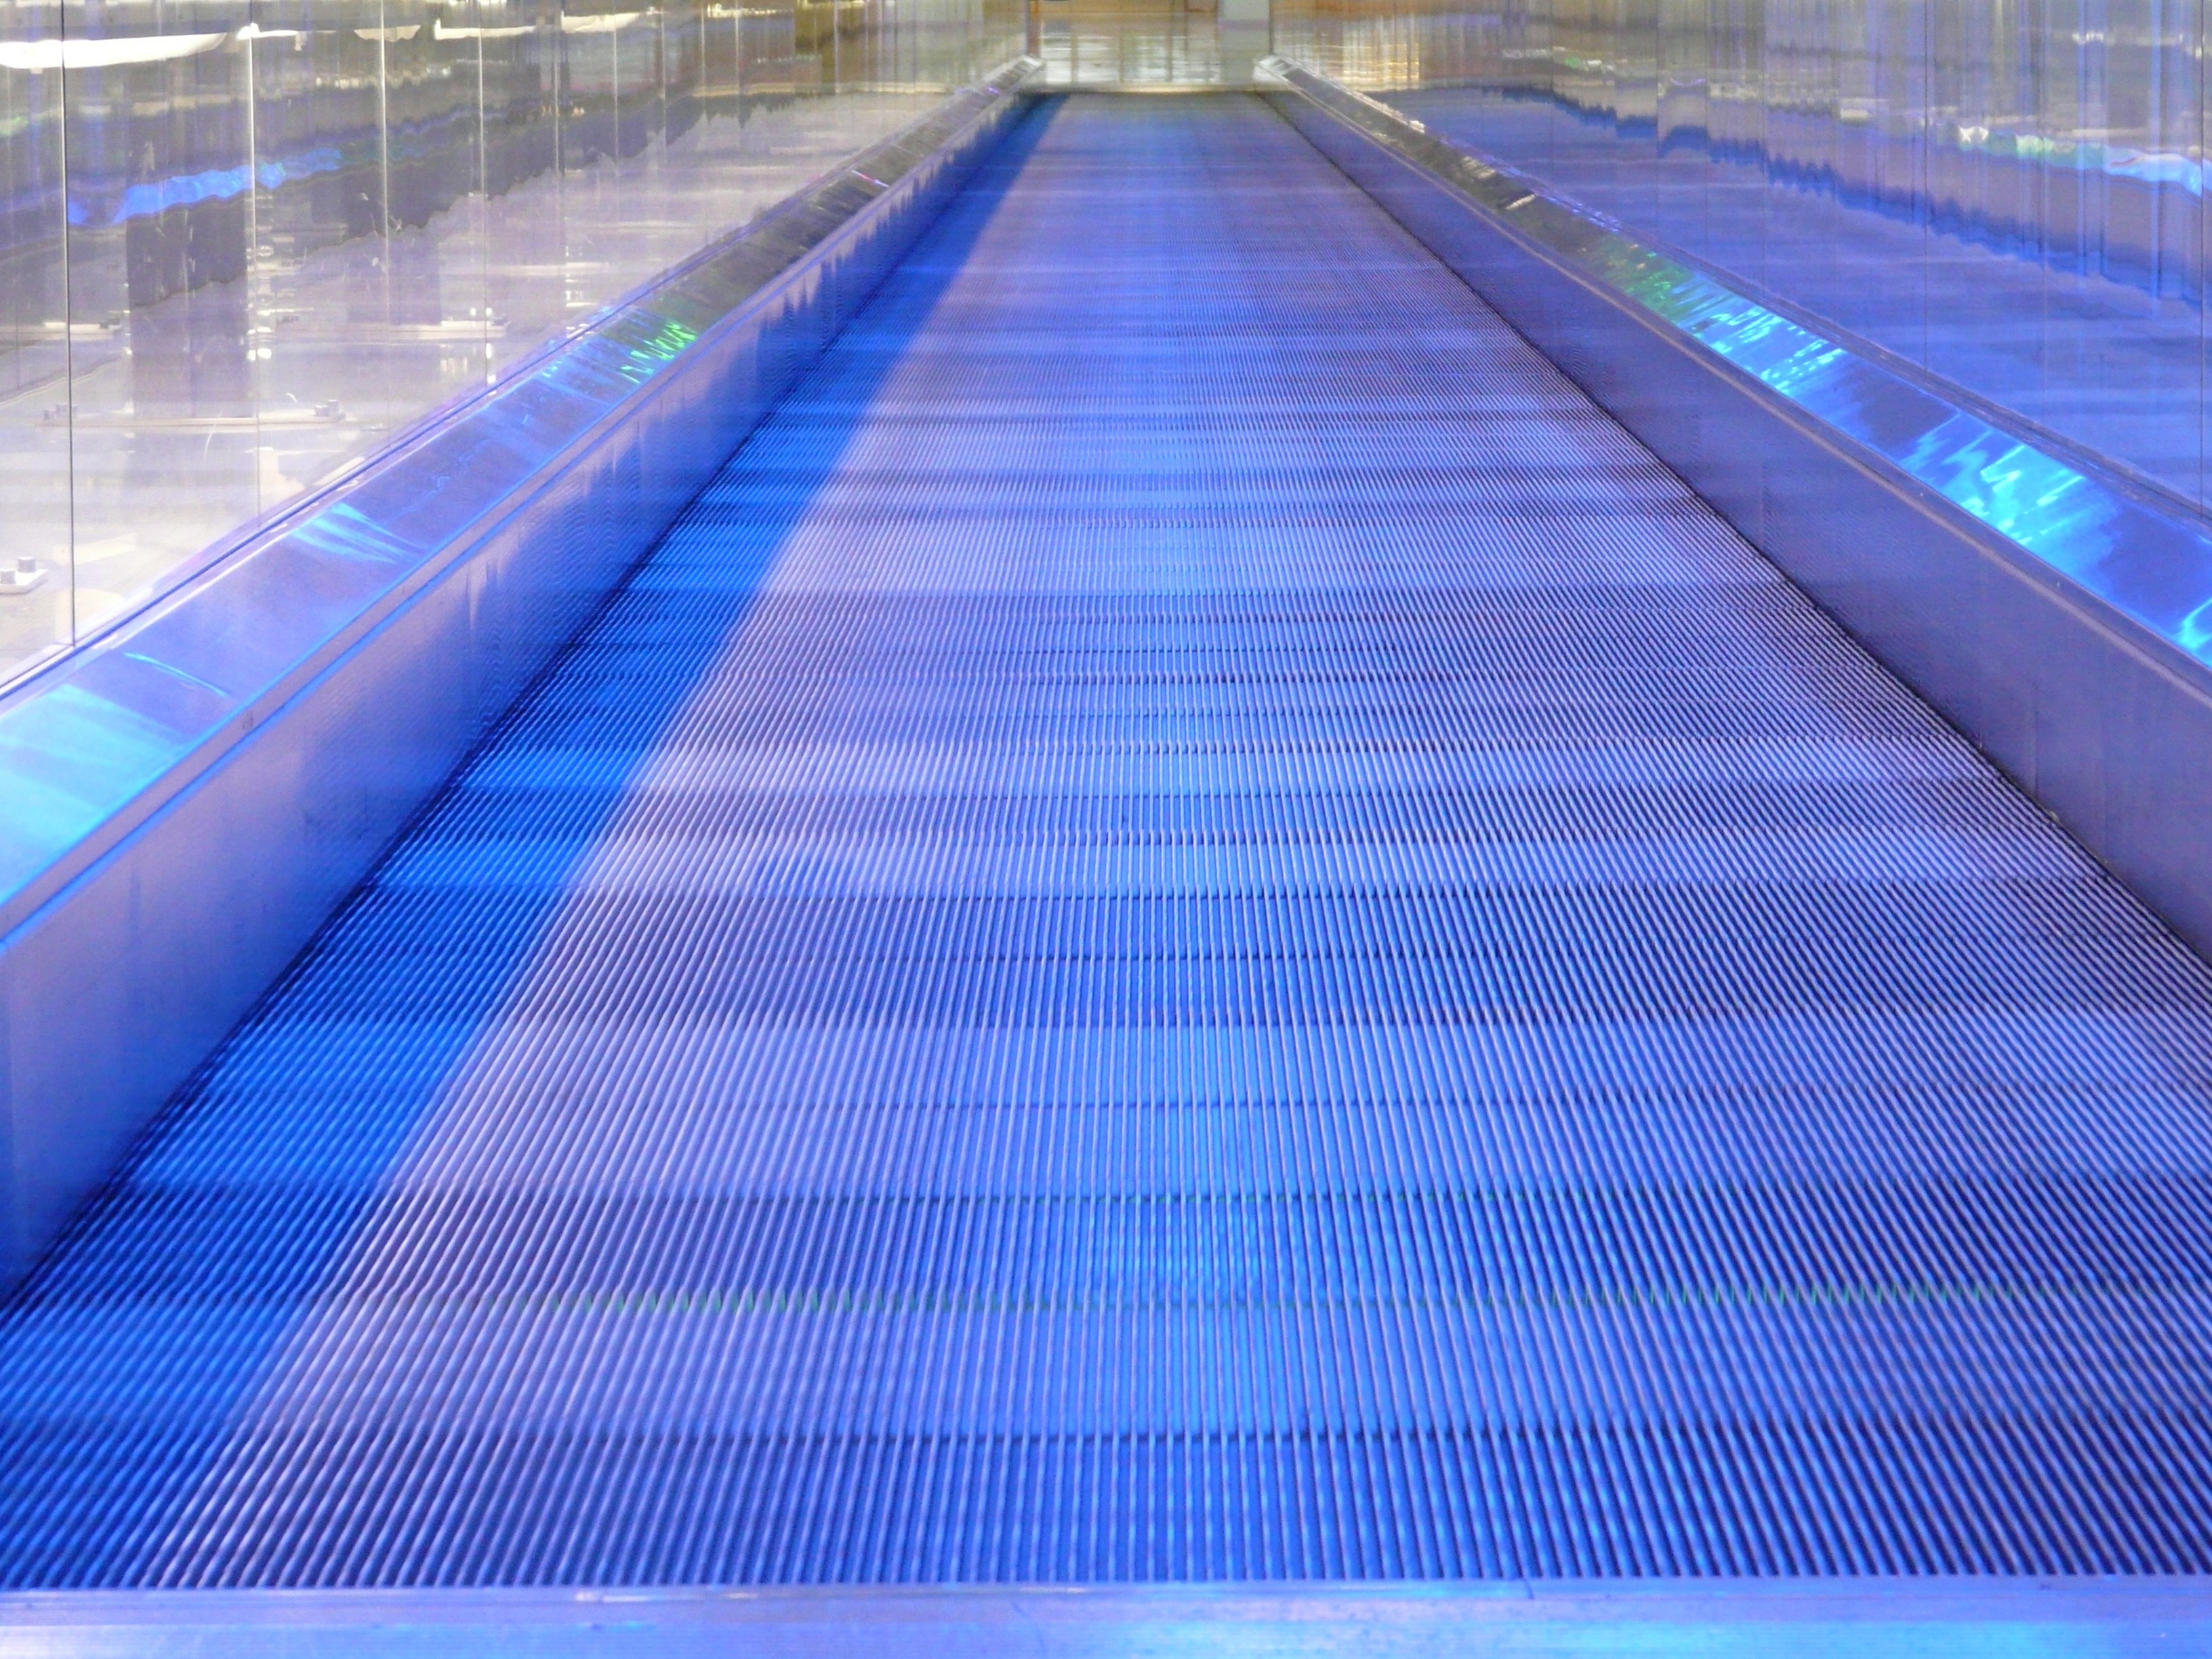 Moving Walkway, Metal Segments, swimming pool, blue